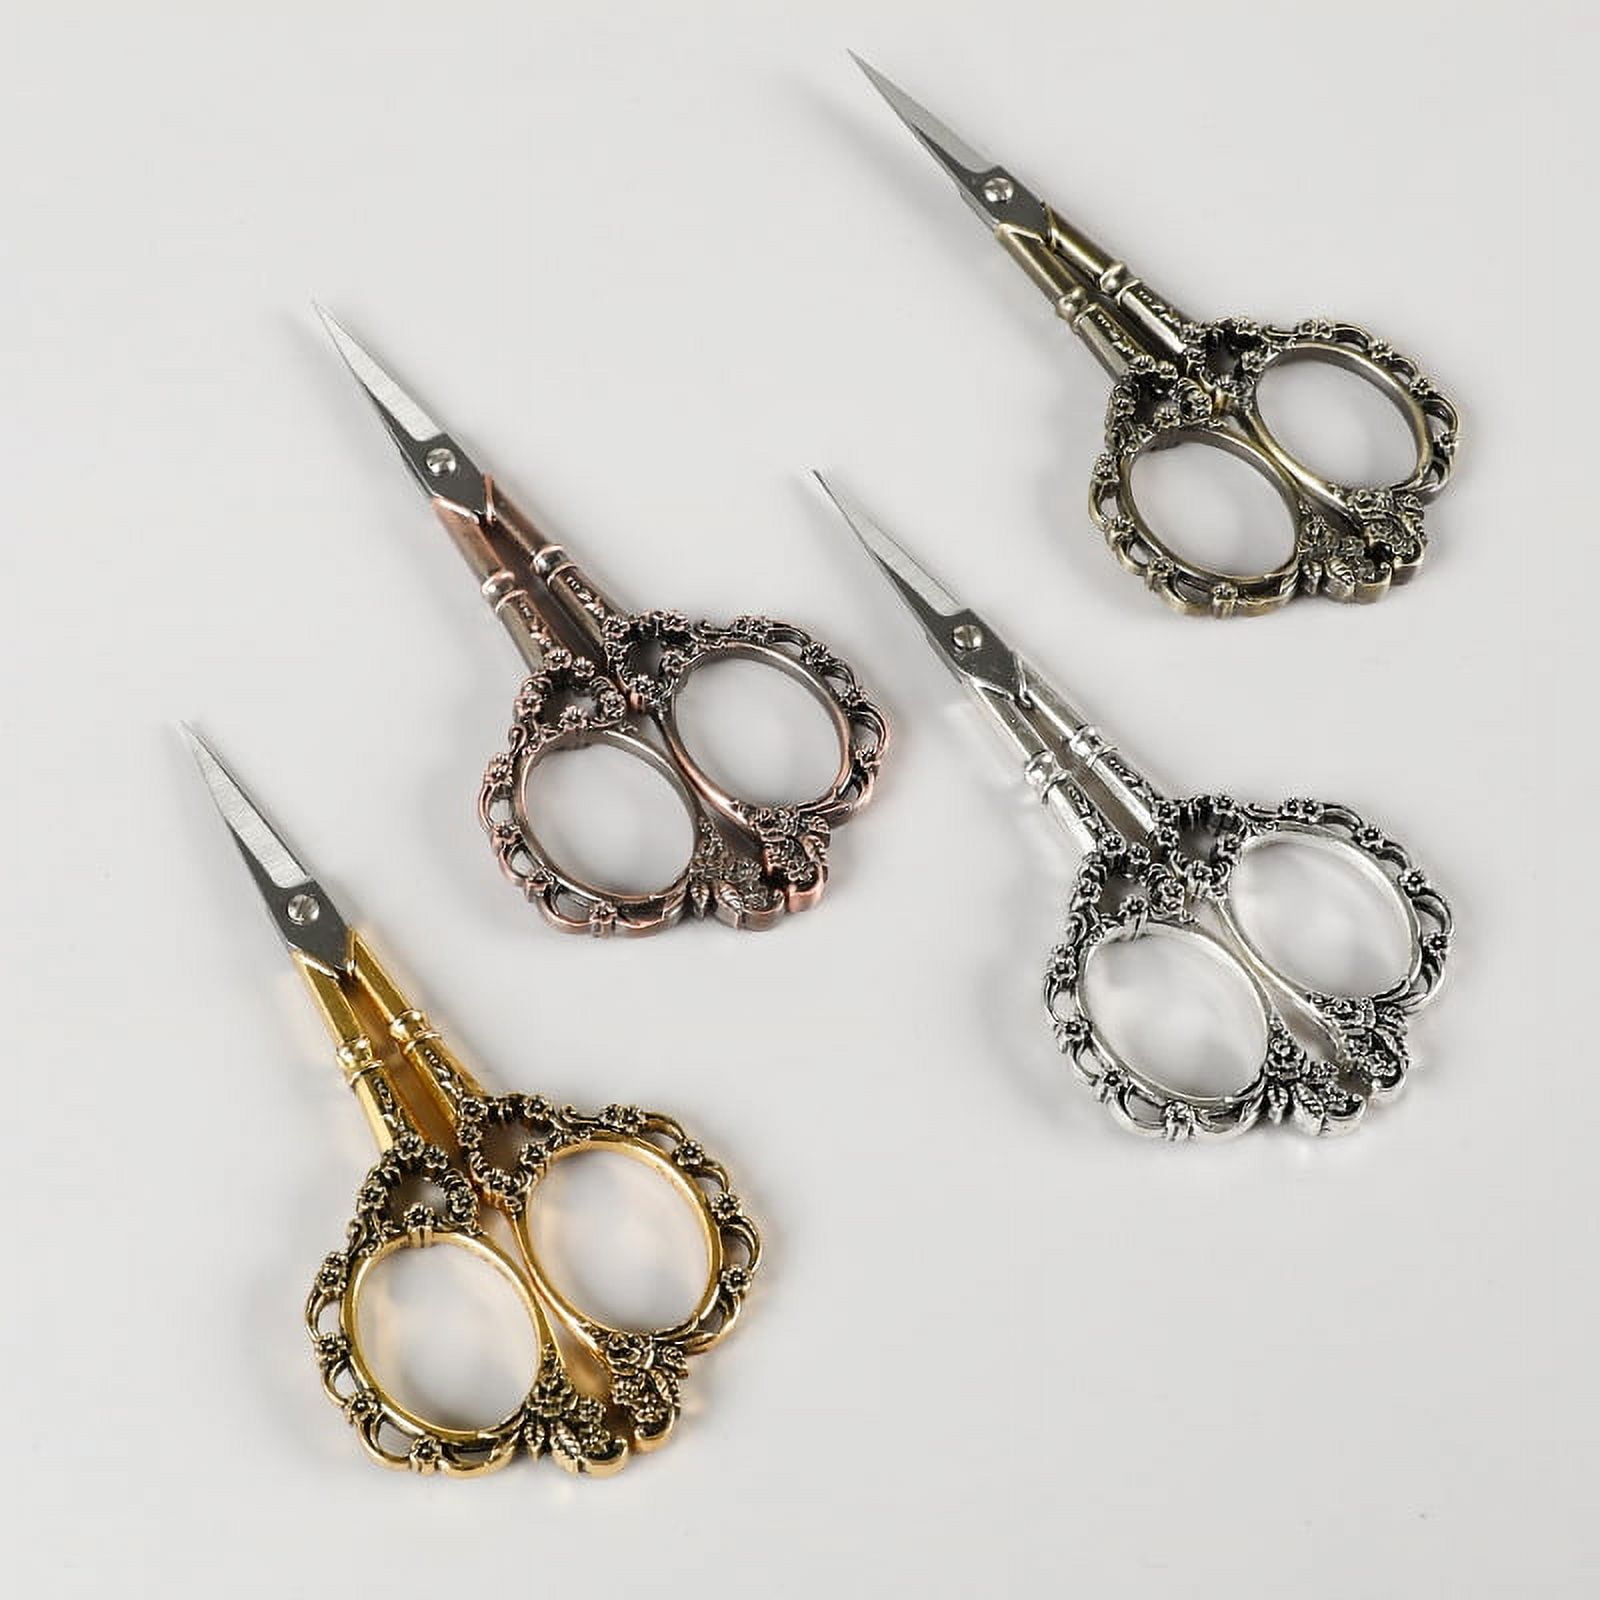 Vintage European Style Craft Scissors